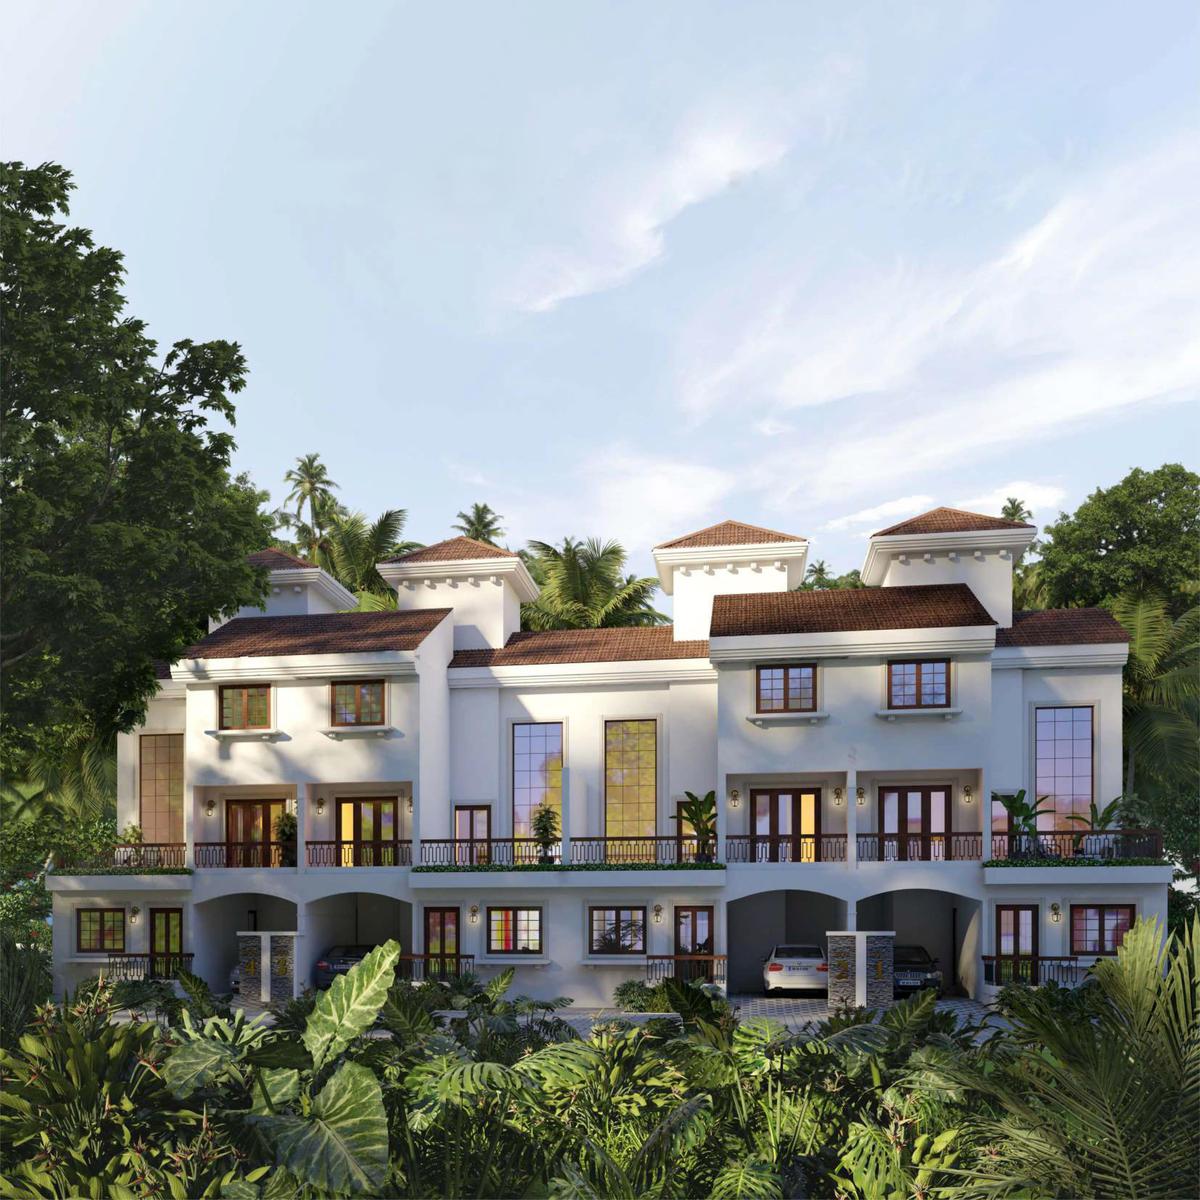 A 3BHK Villa in MVR Casa Aurea, Siolim, Goa priced at ₹32.43 lacs per share.